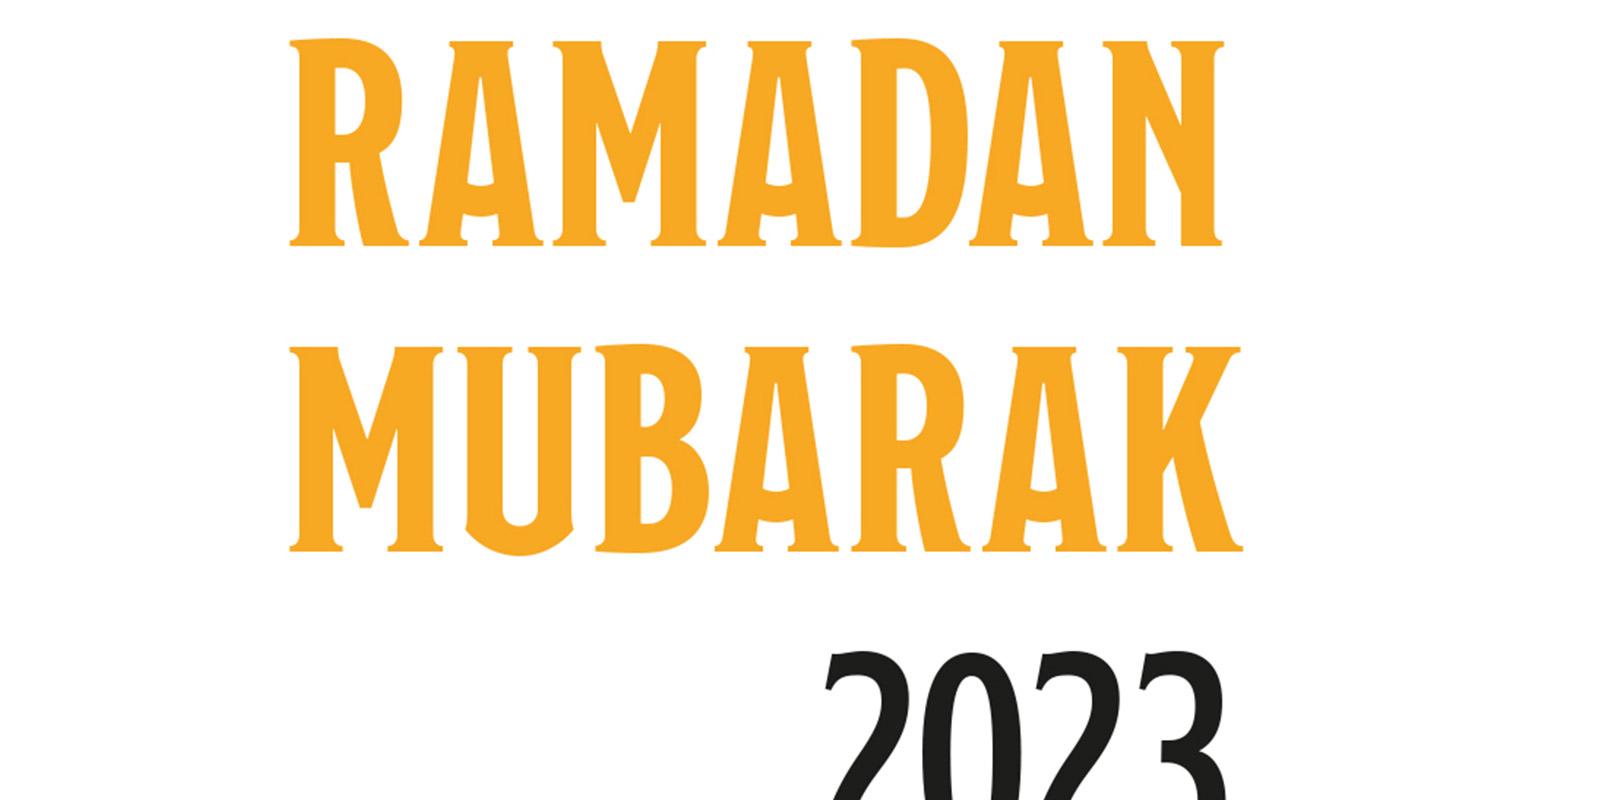 Grußwort zum Ramadan 2023